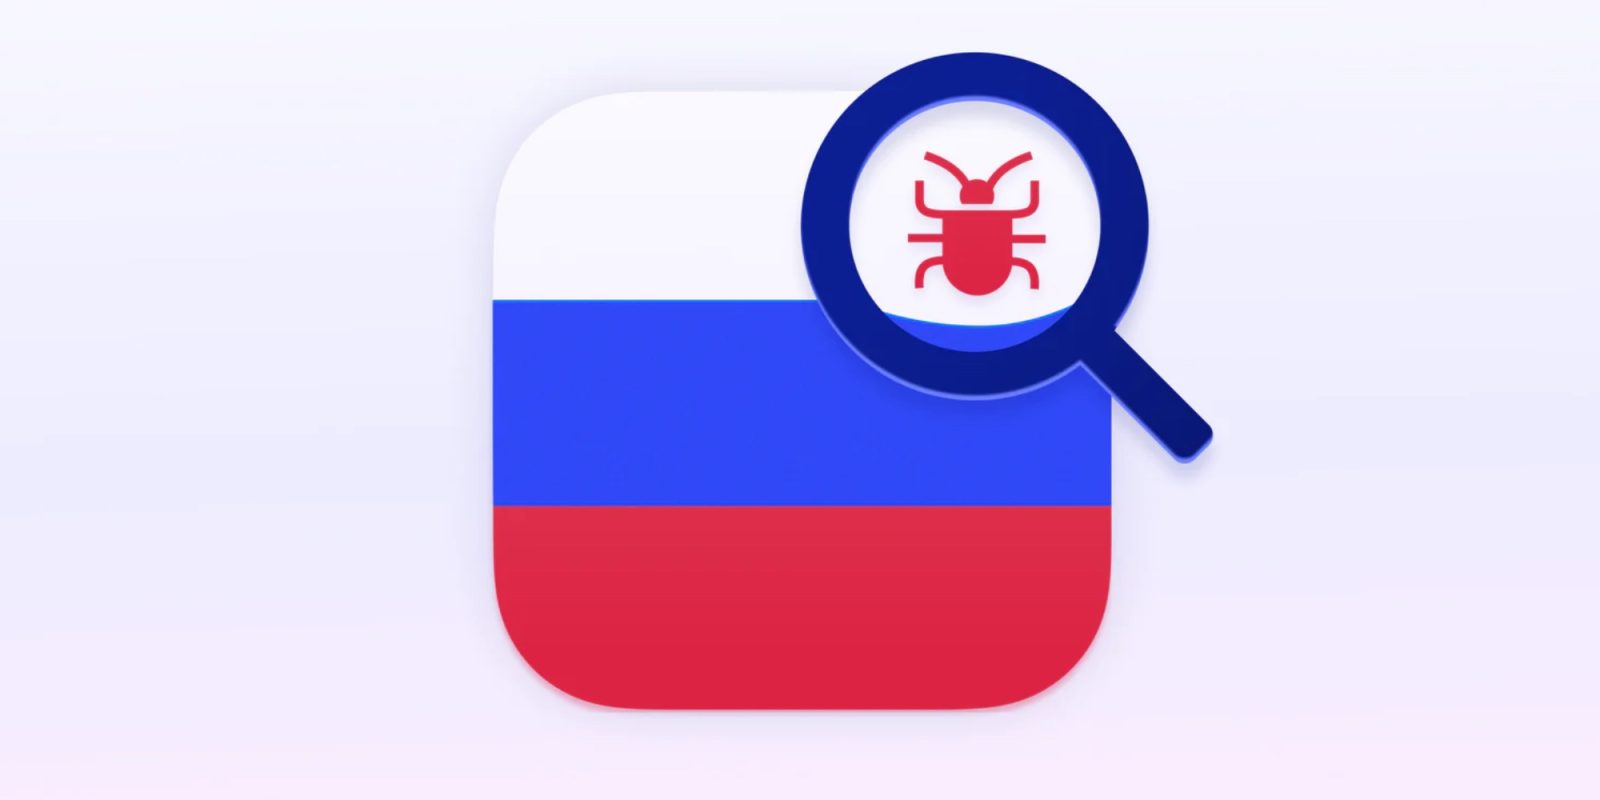 cleanmymac-x-suspicious-app-russia-9to5mac-1